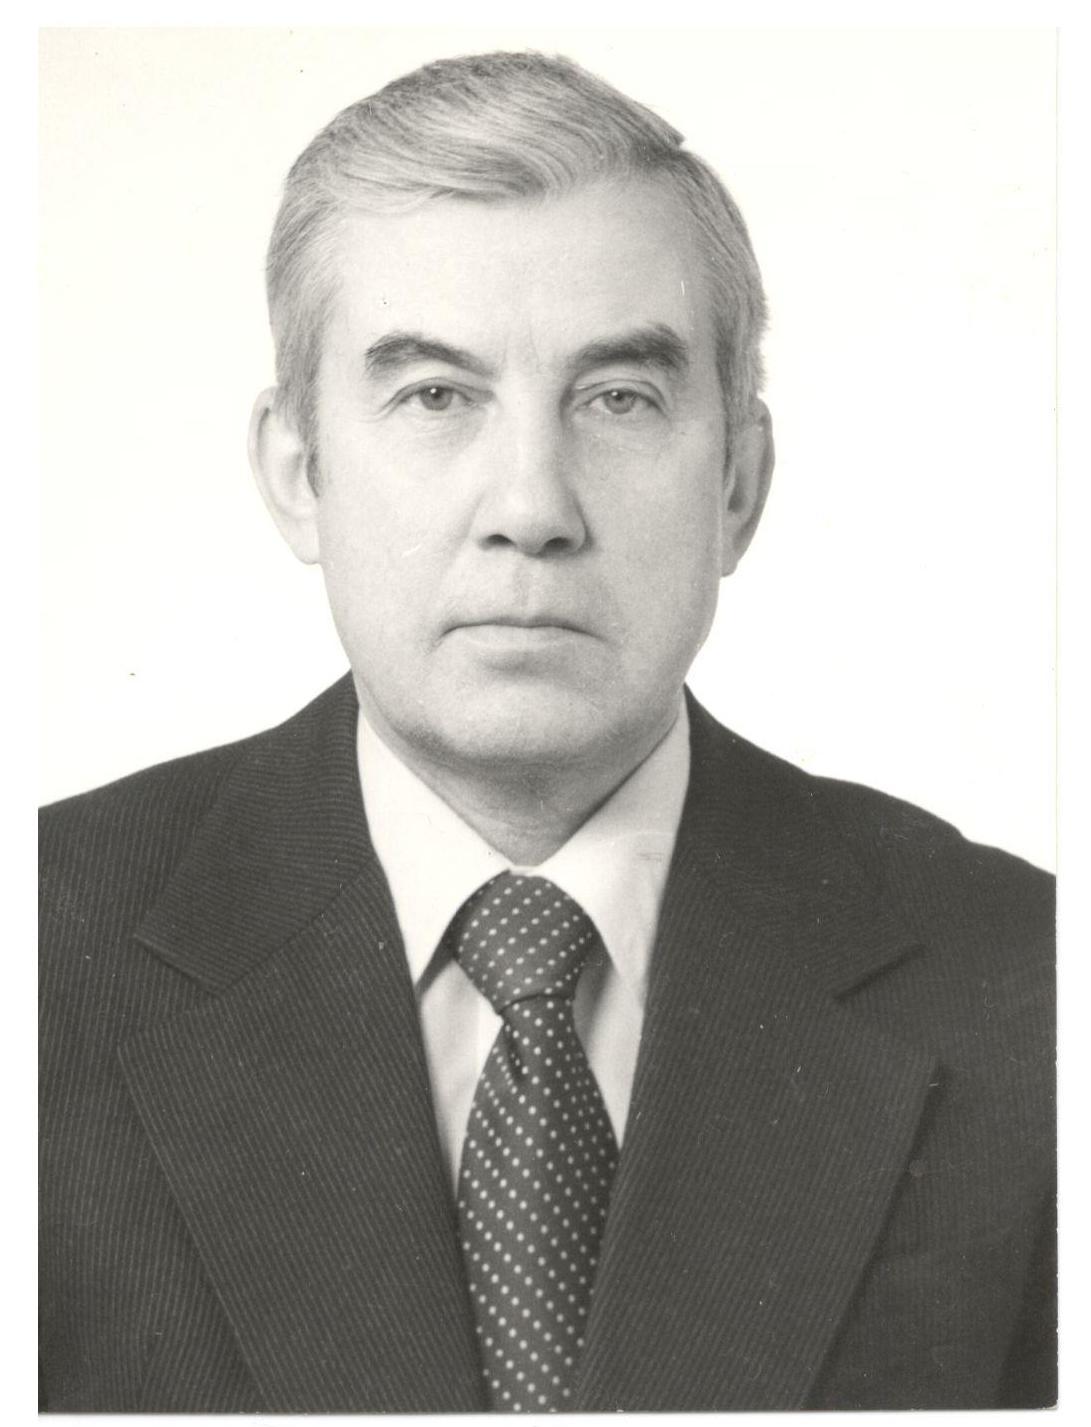 Ф. 1159. Лебединский Николай Павлович